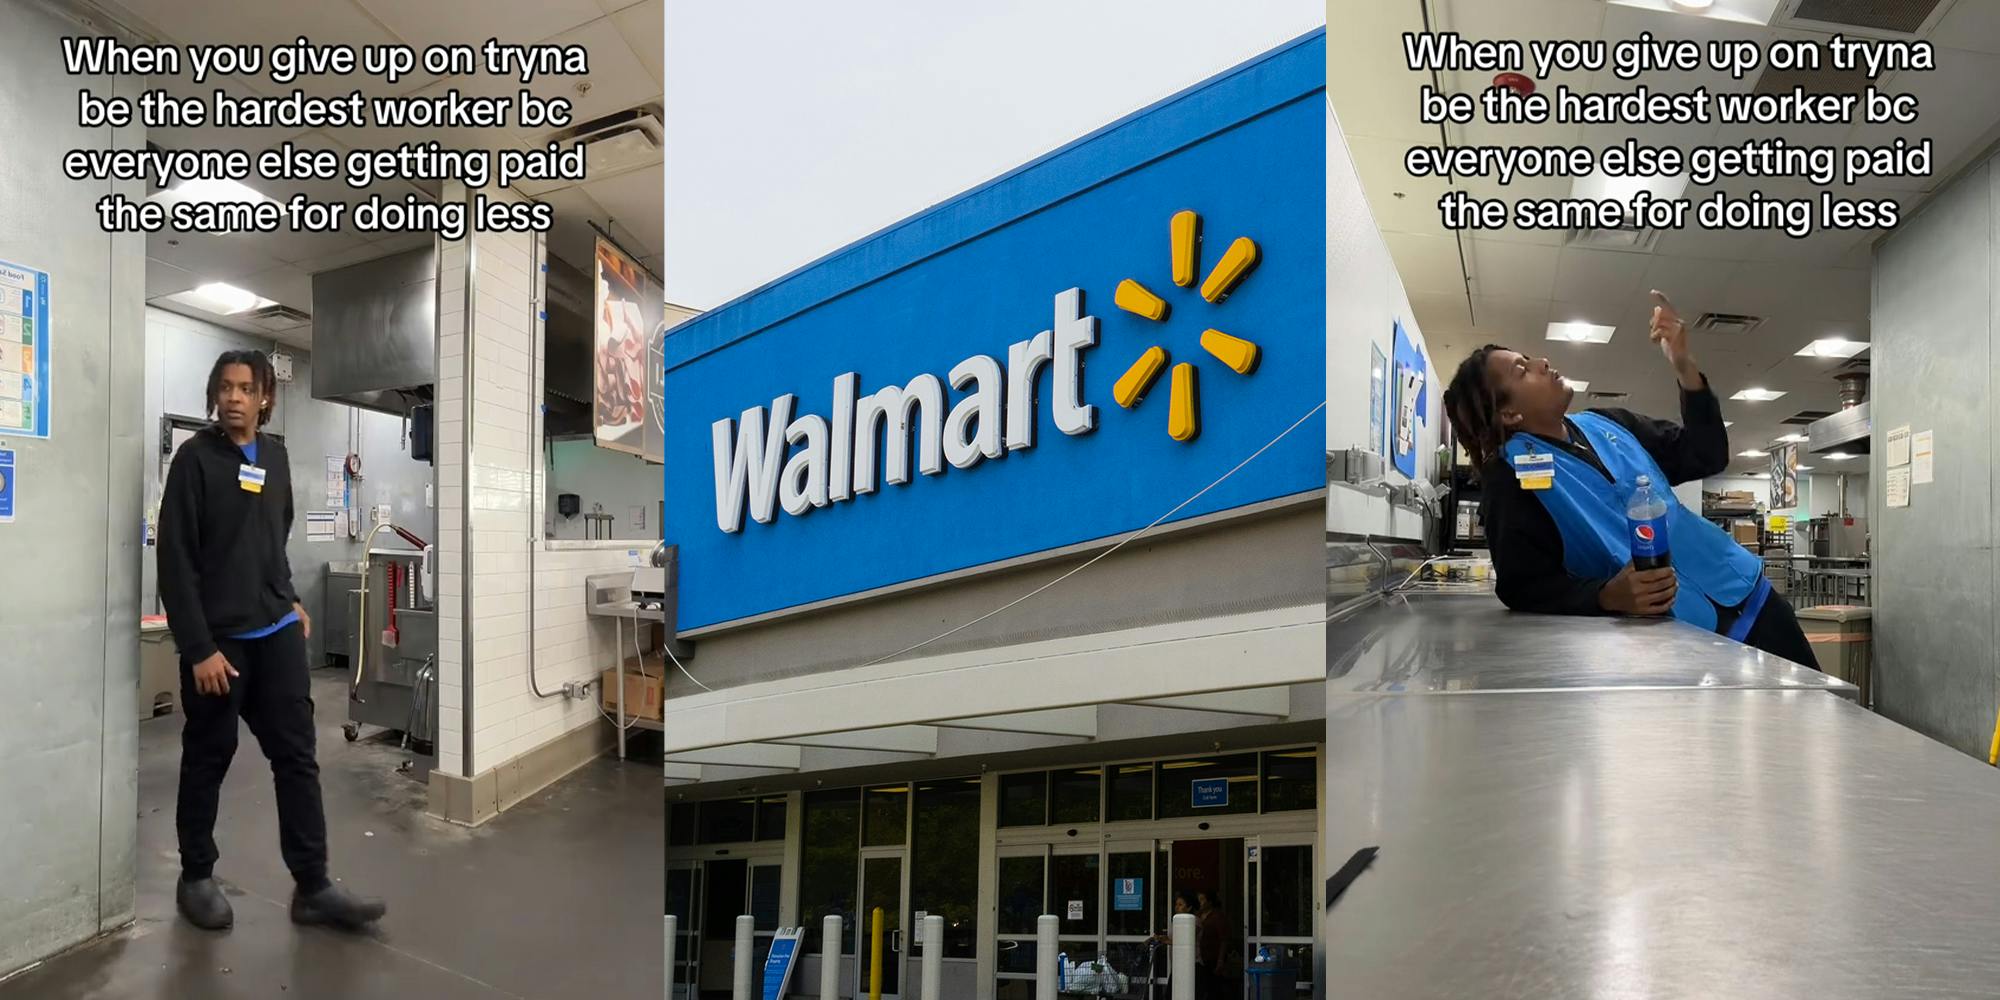 Walmart worker says he'll stop working hard